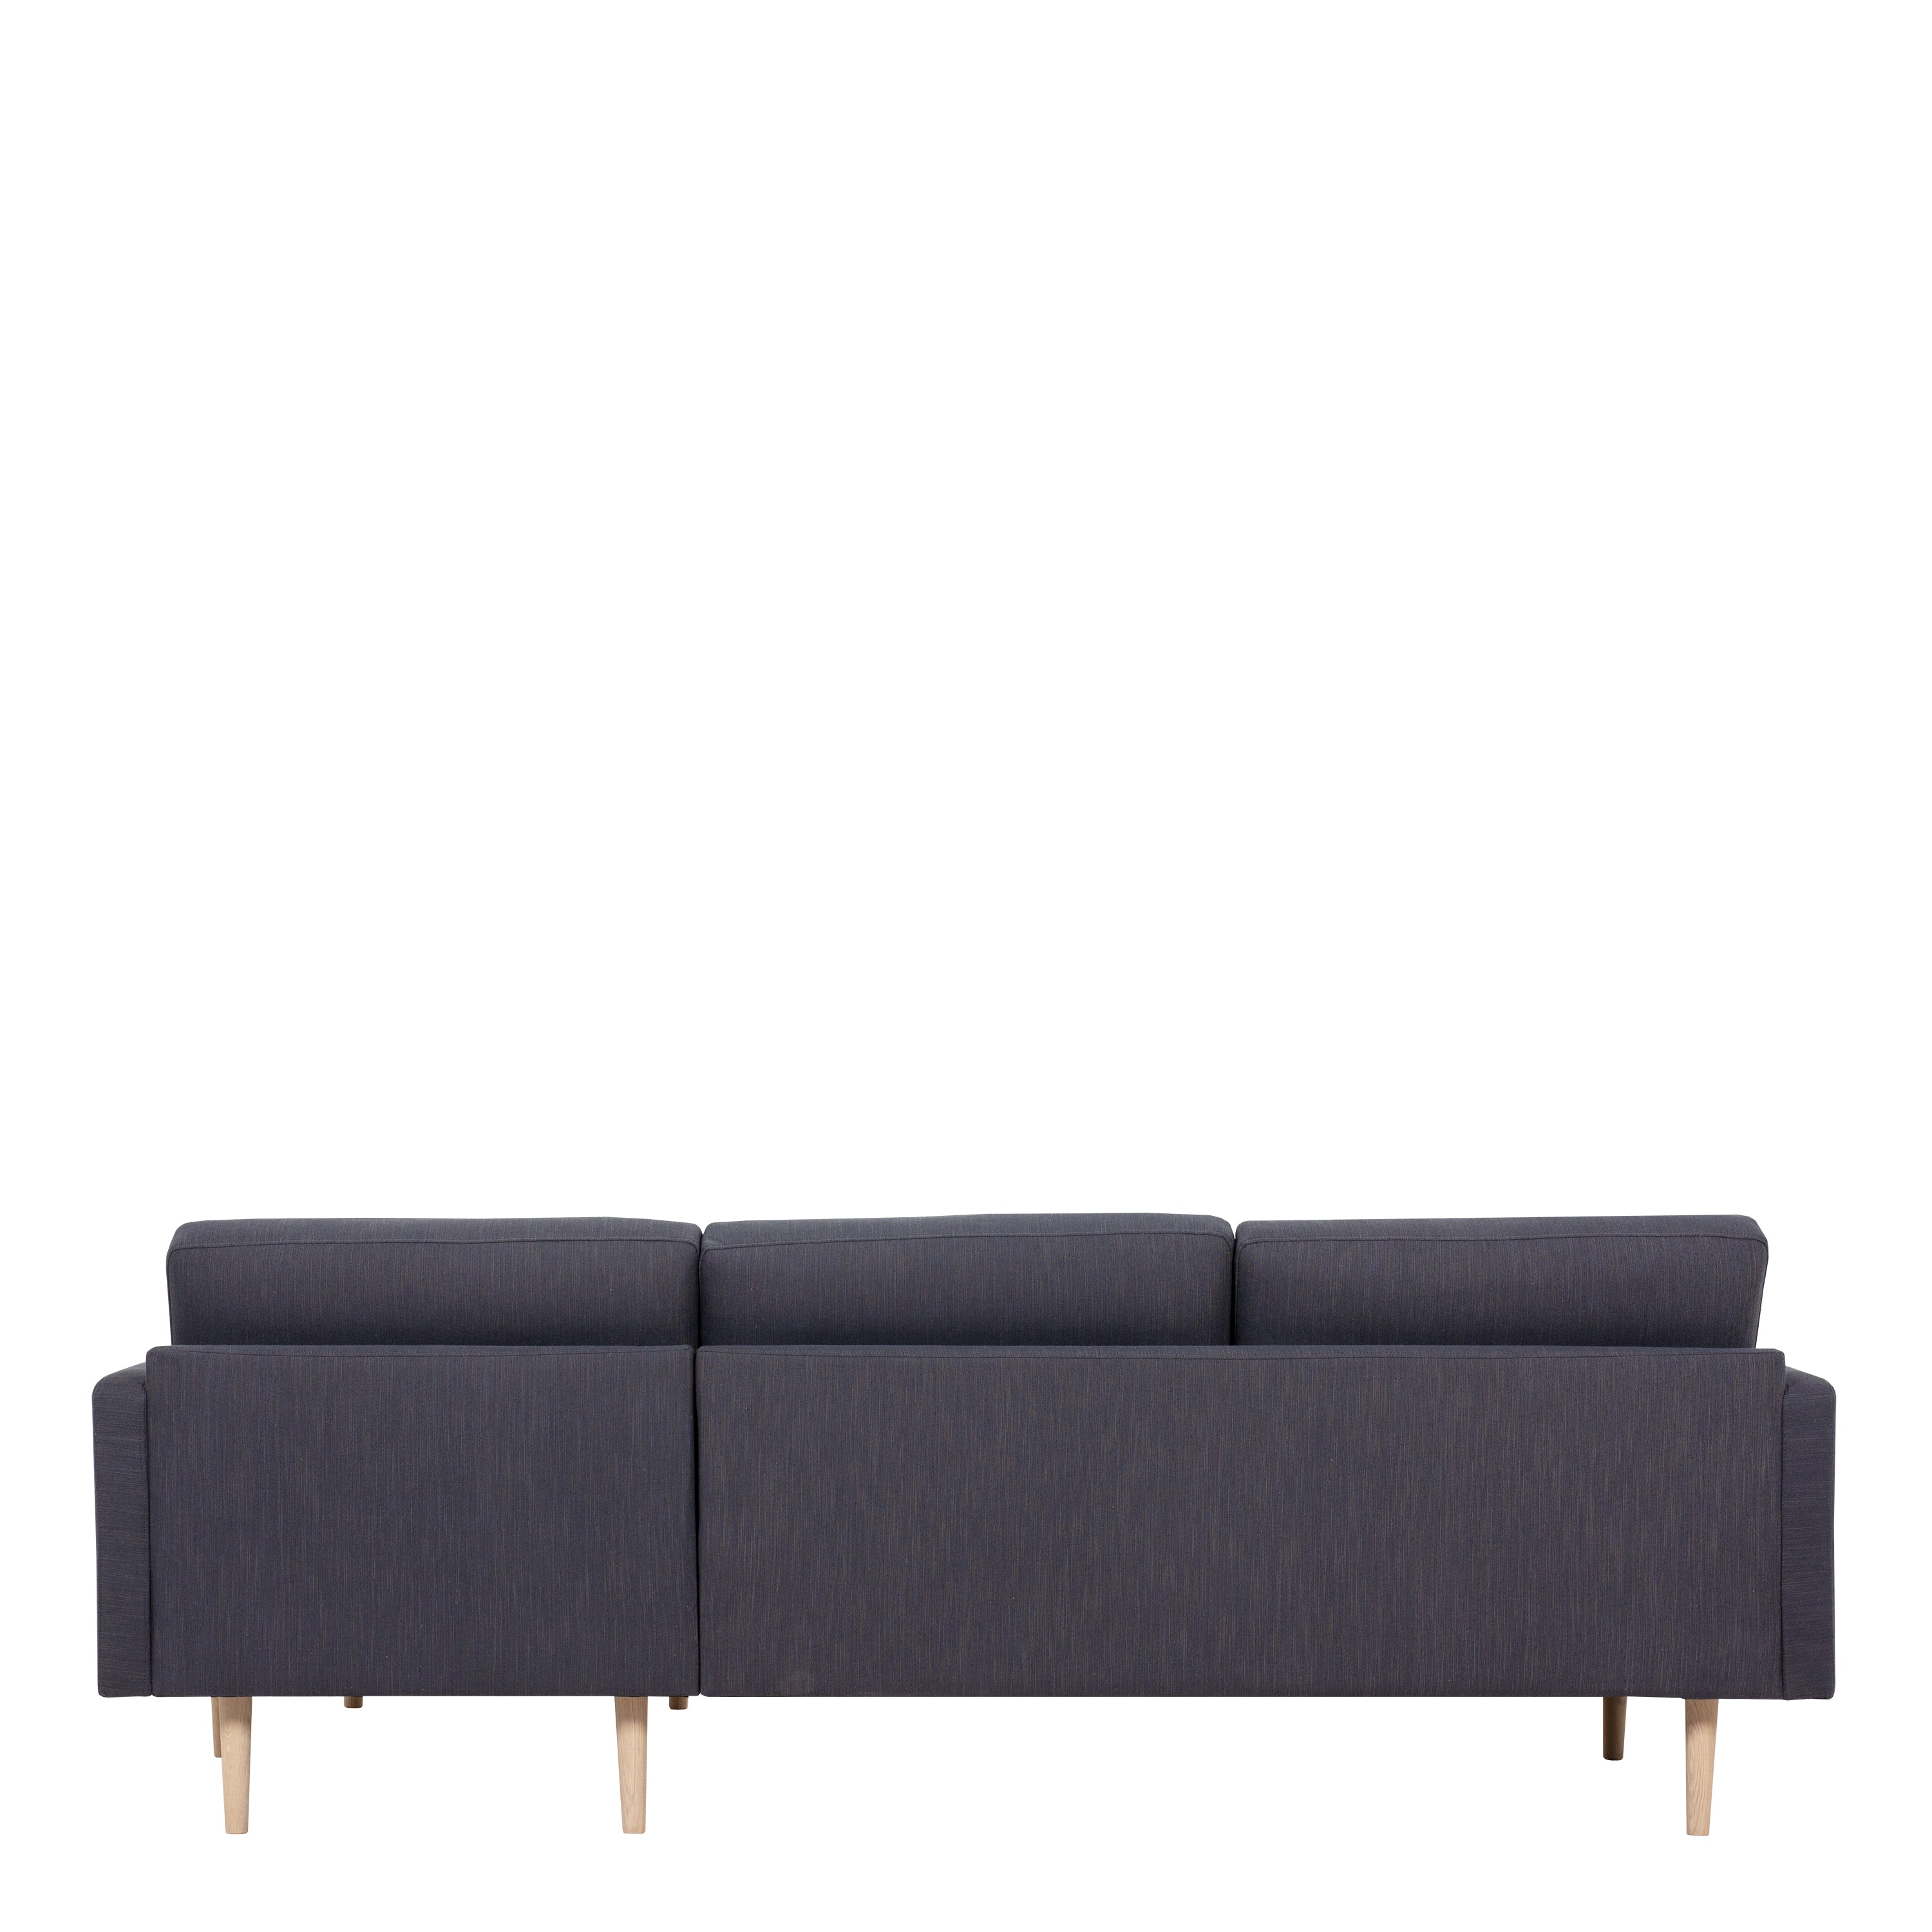 Larvik Chaiselongue Sofa (RH) - Anthracite, Oak Legs